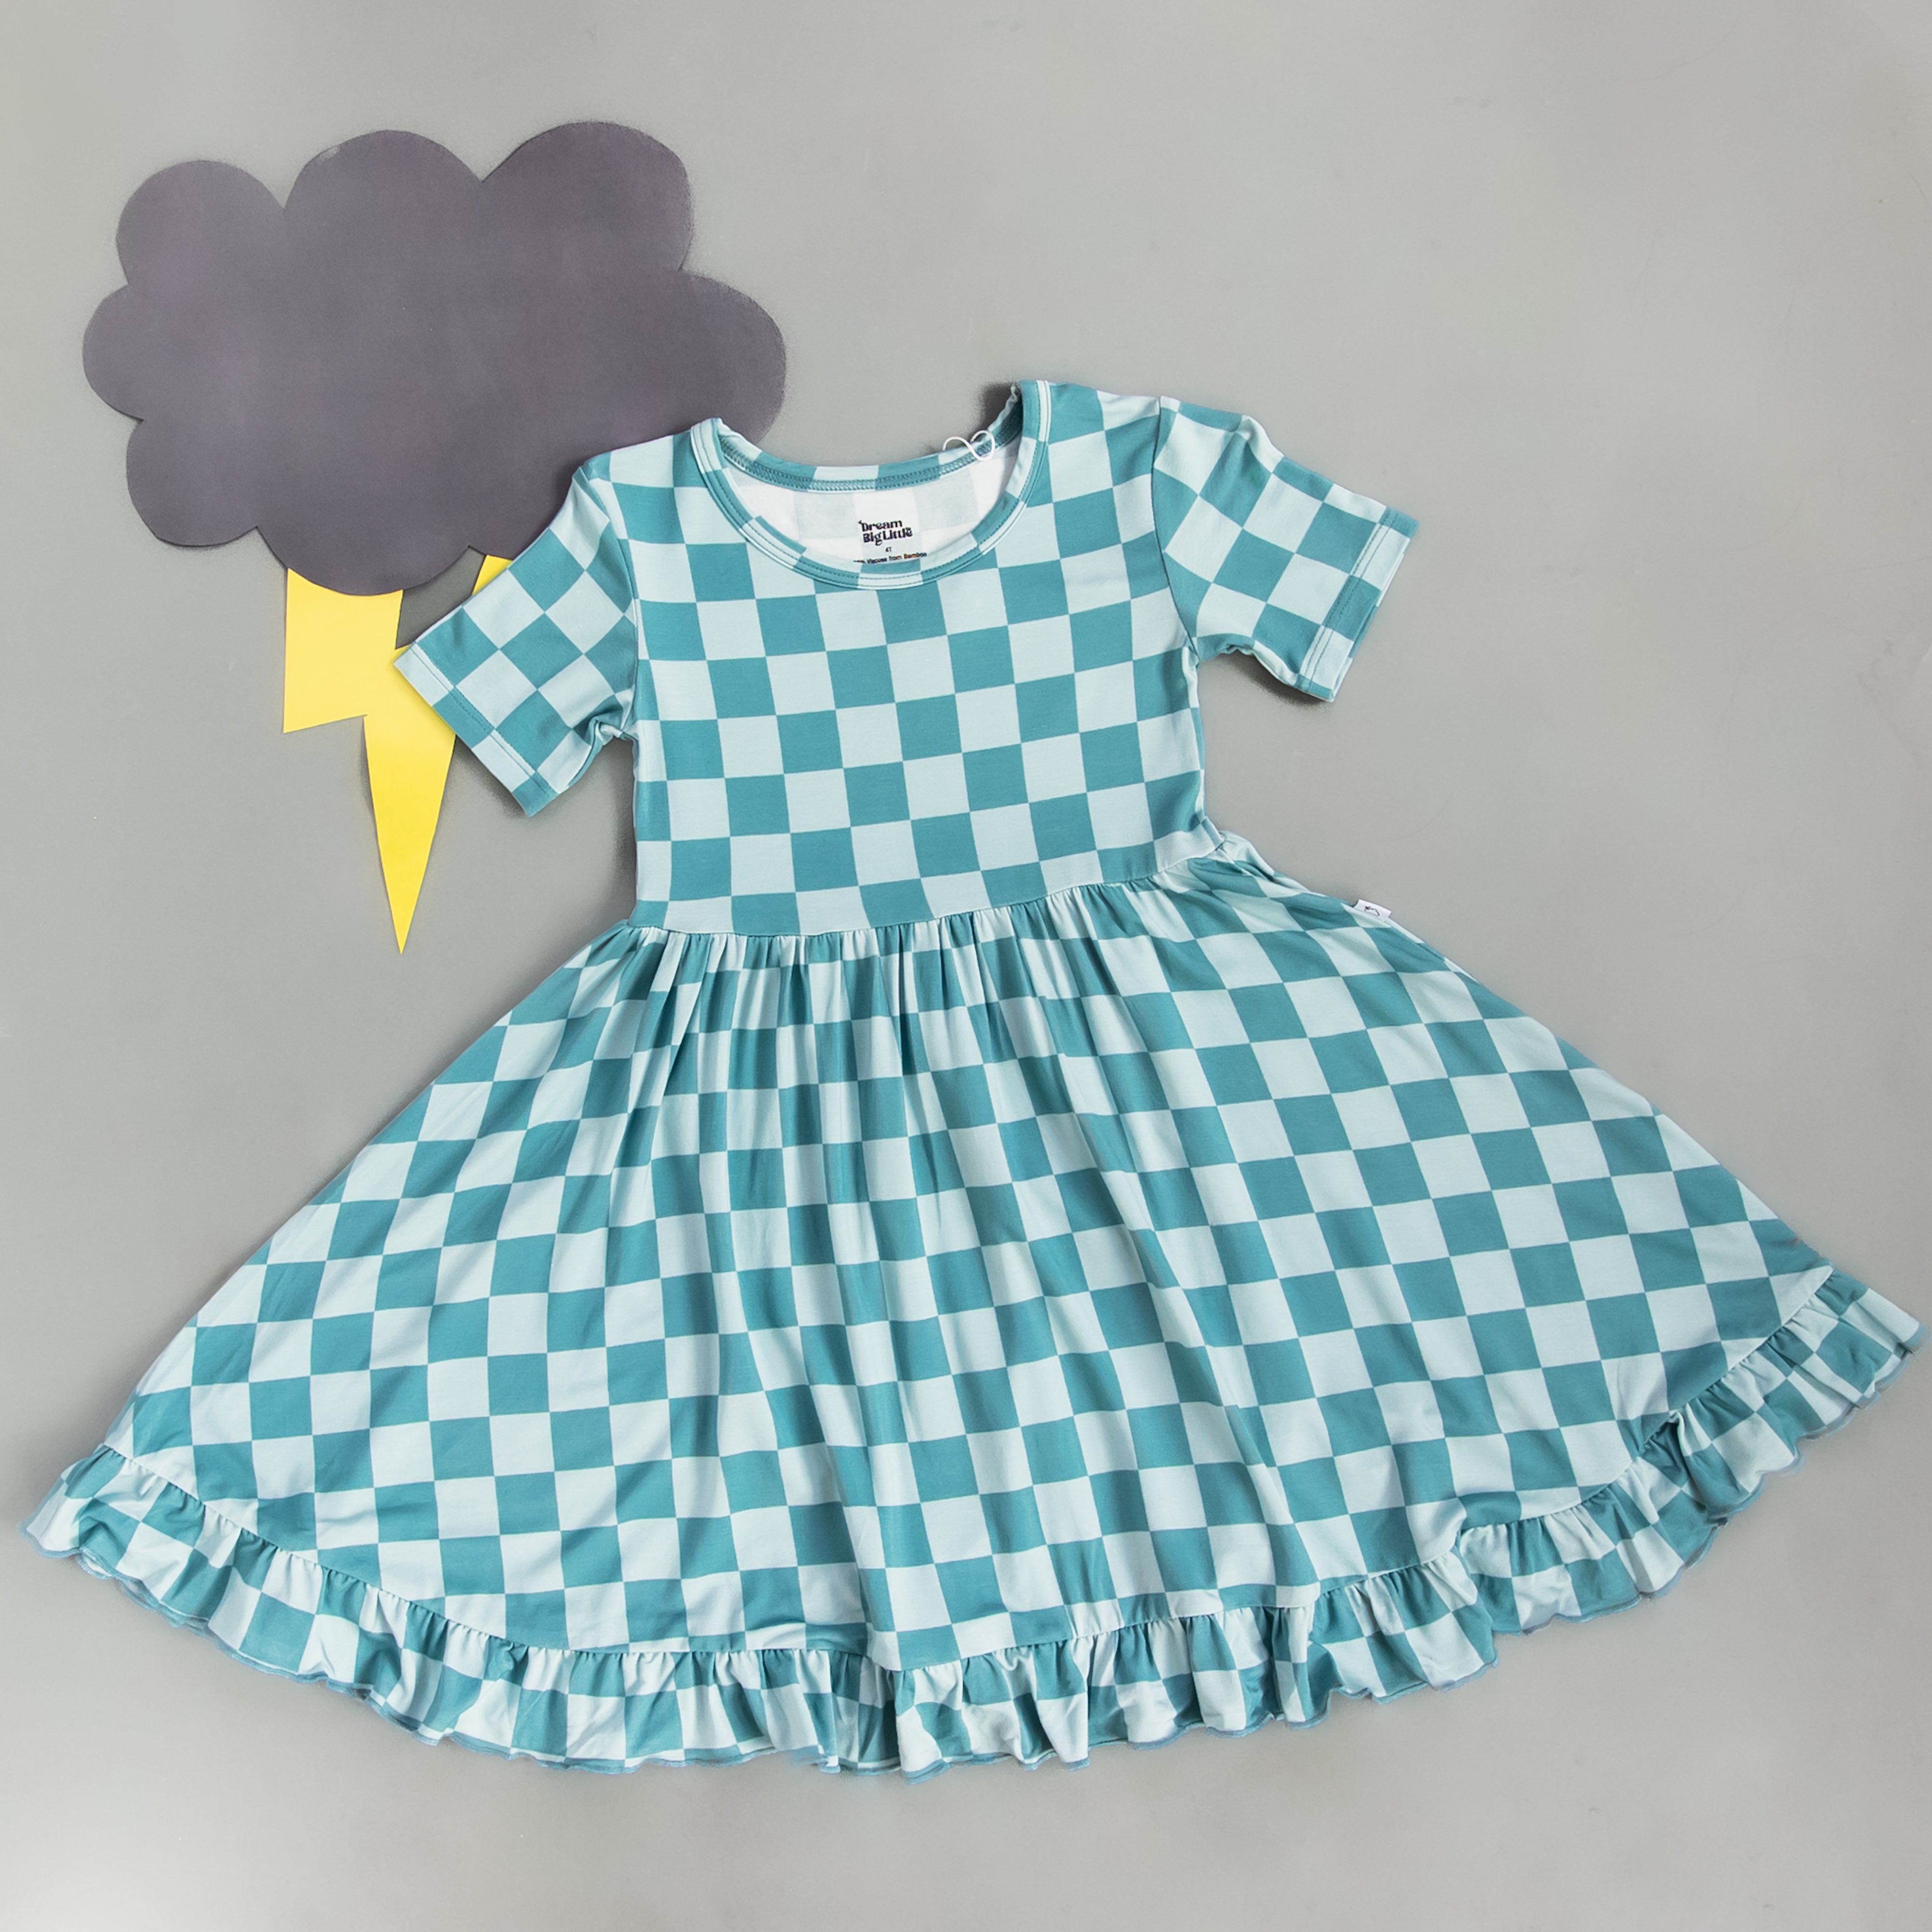 Stormy Checkers Dream Ruffle Dress